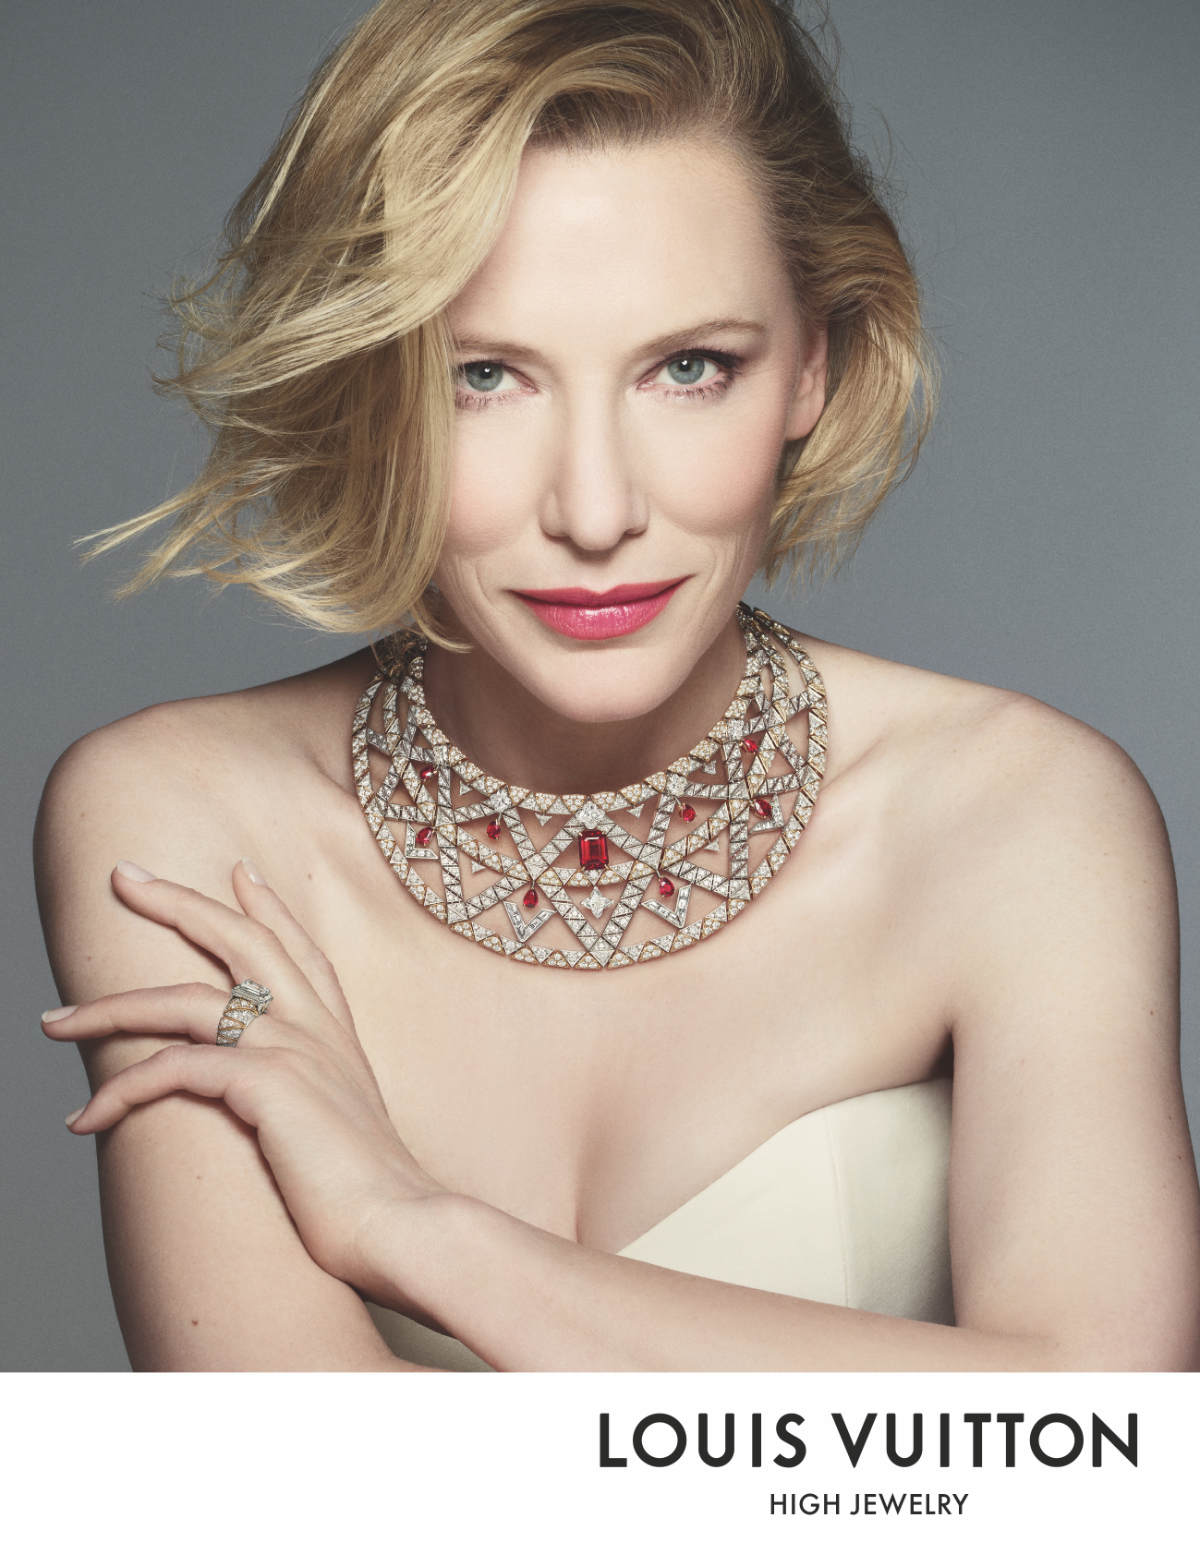 Louis Vuitton Announced Cate Blanchett As Its Newest House Ambassador